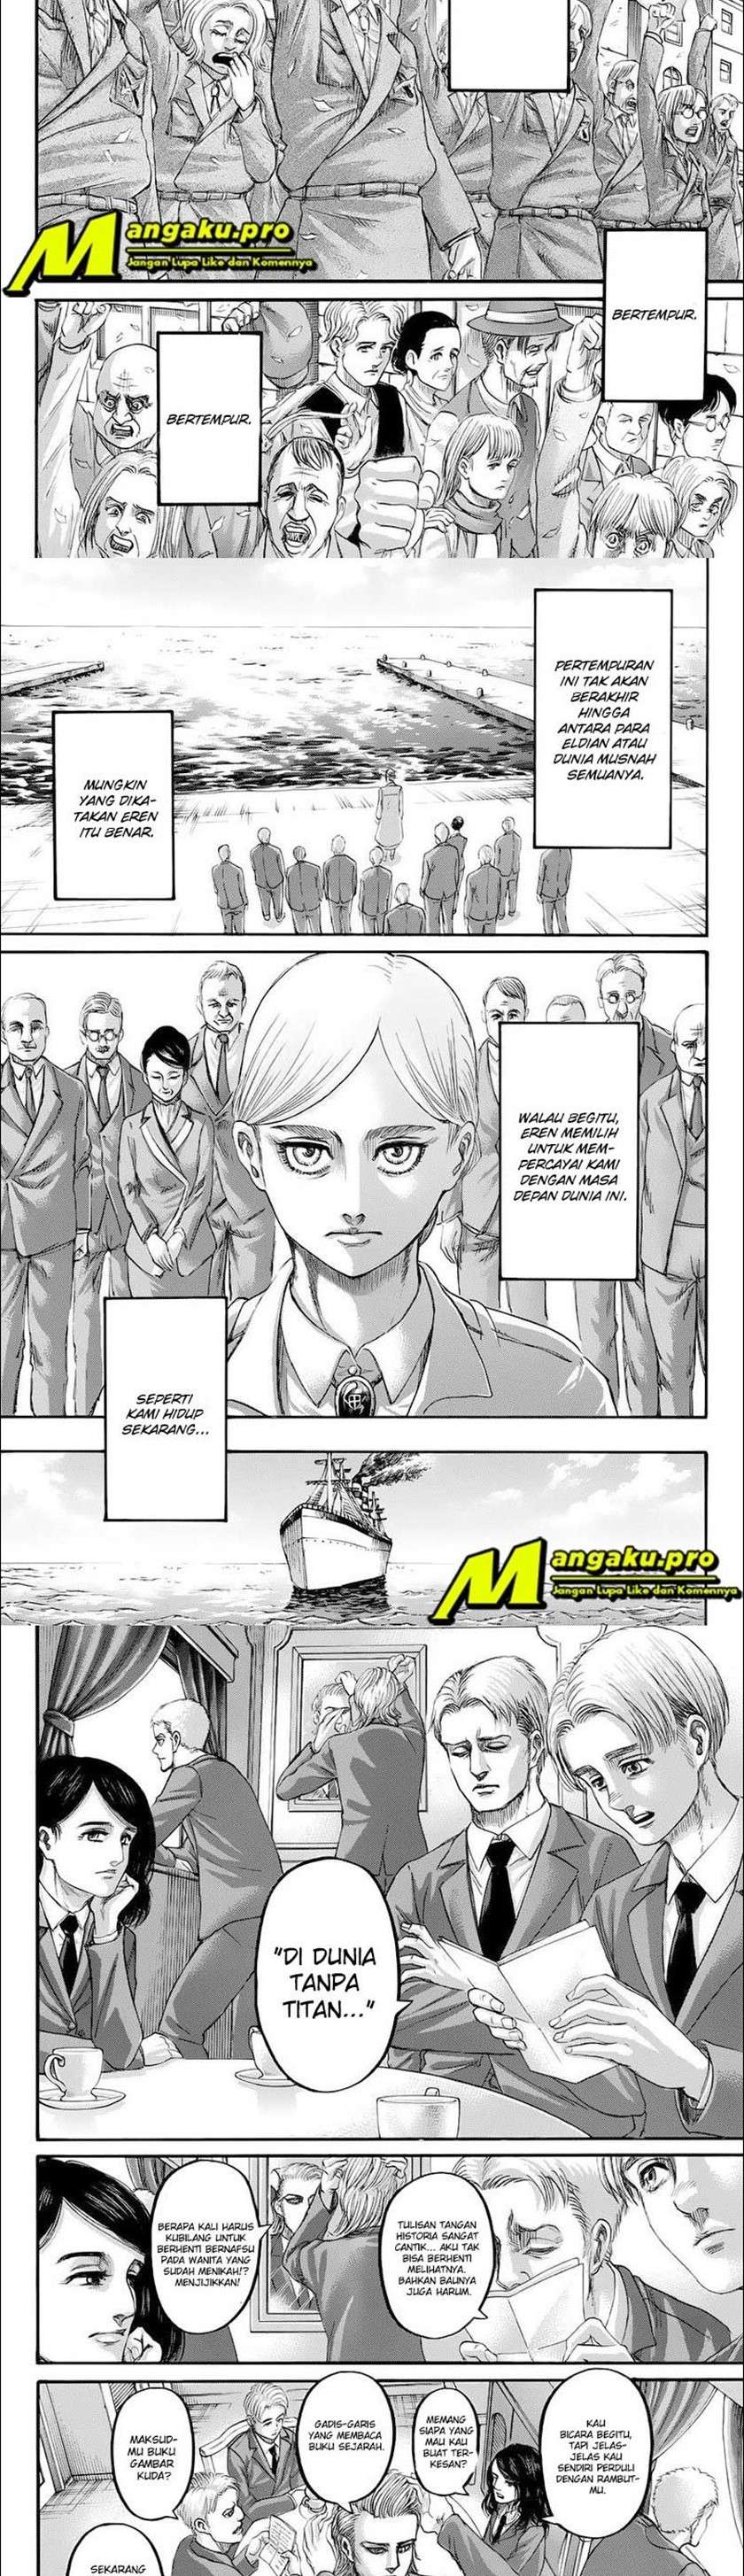 Shingeki no Kyojin Chapter 139.2 End